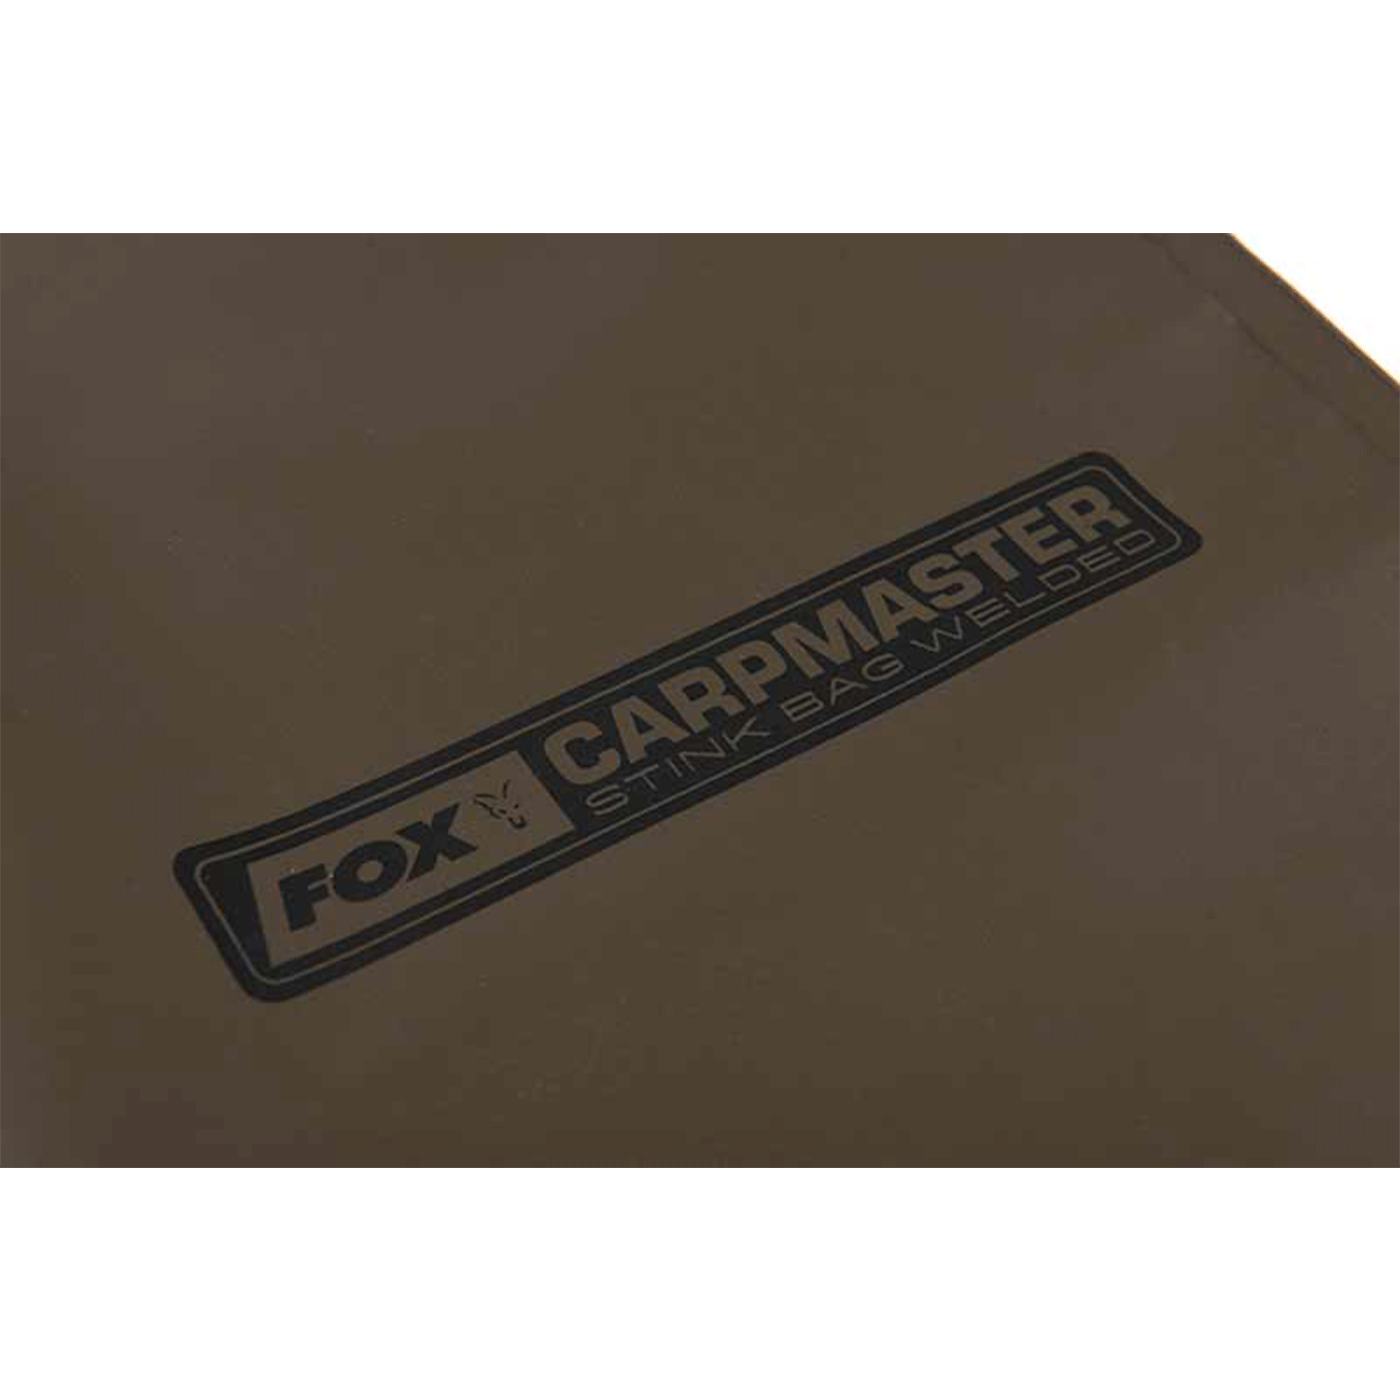 FOX - CARPMASTER WELDED STINK BAG